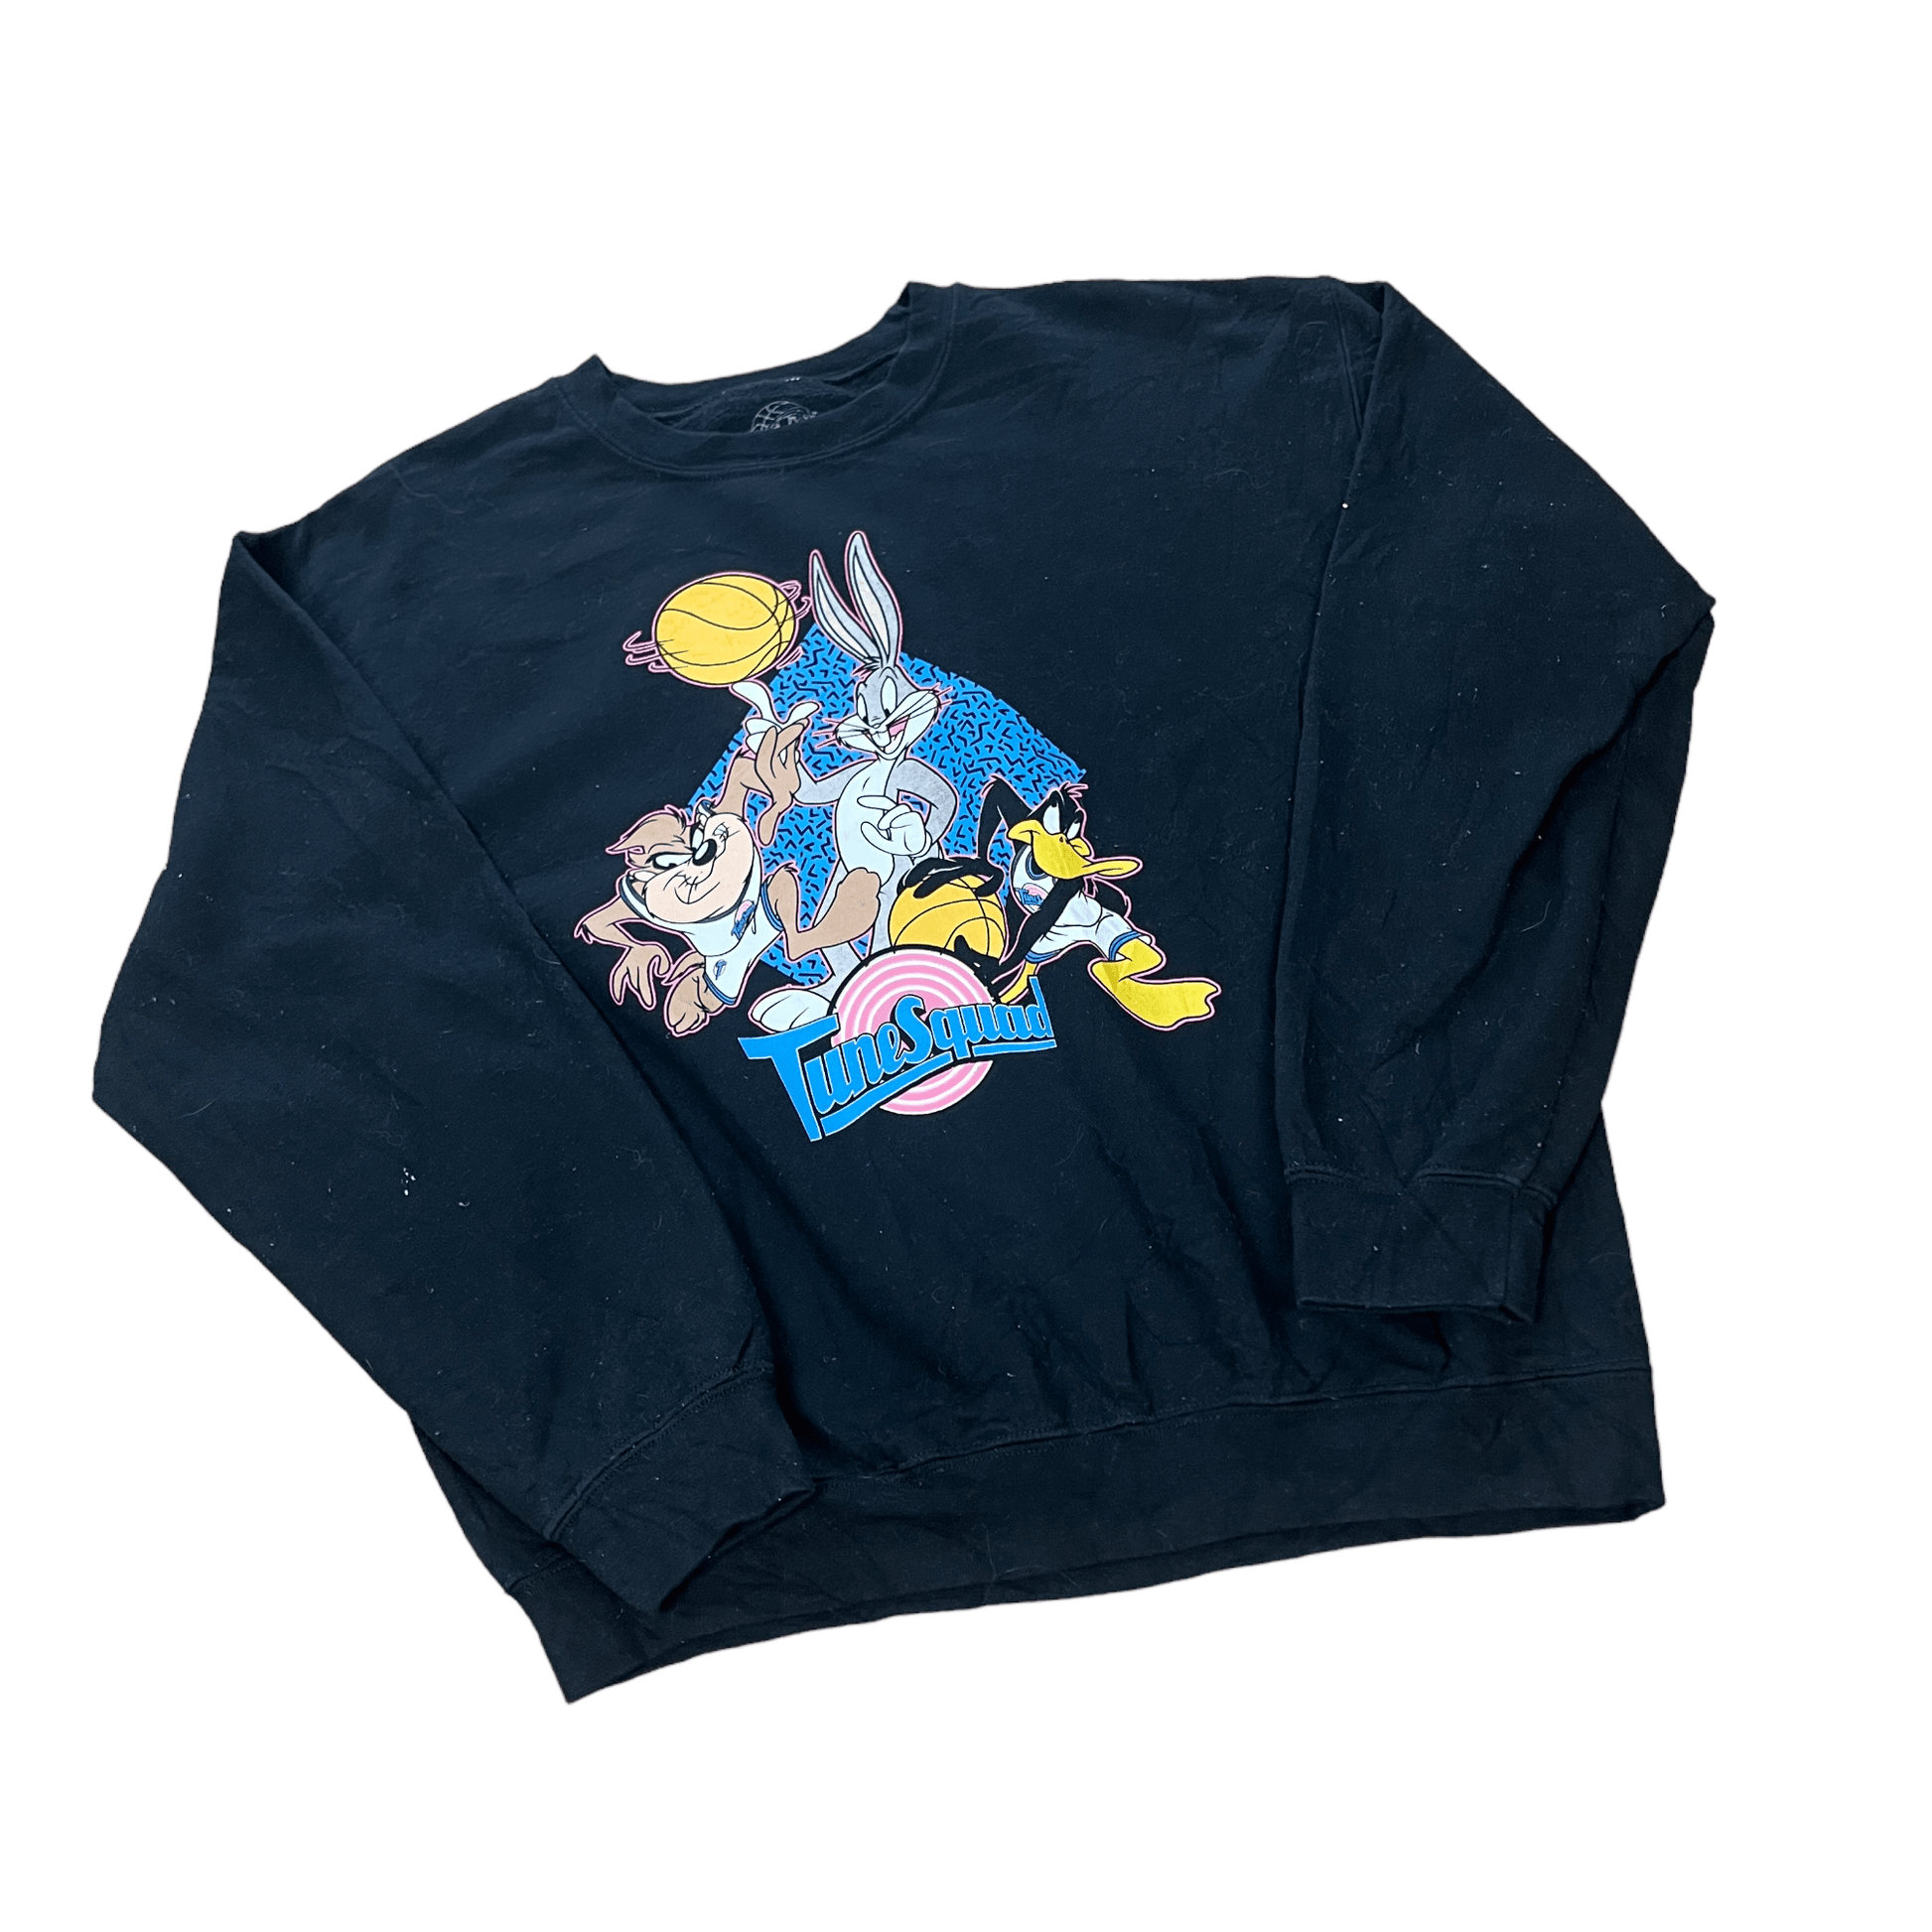 Vintage 90s Black Looney Tunes Squad Sweatshirt - Large - The Streetwear Studio